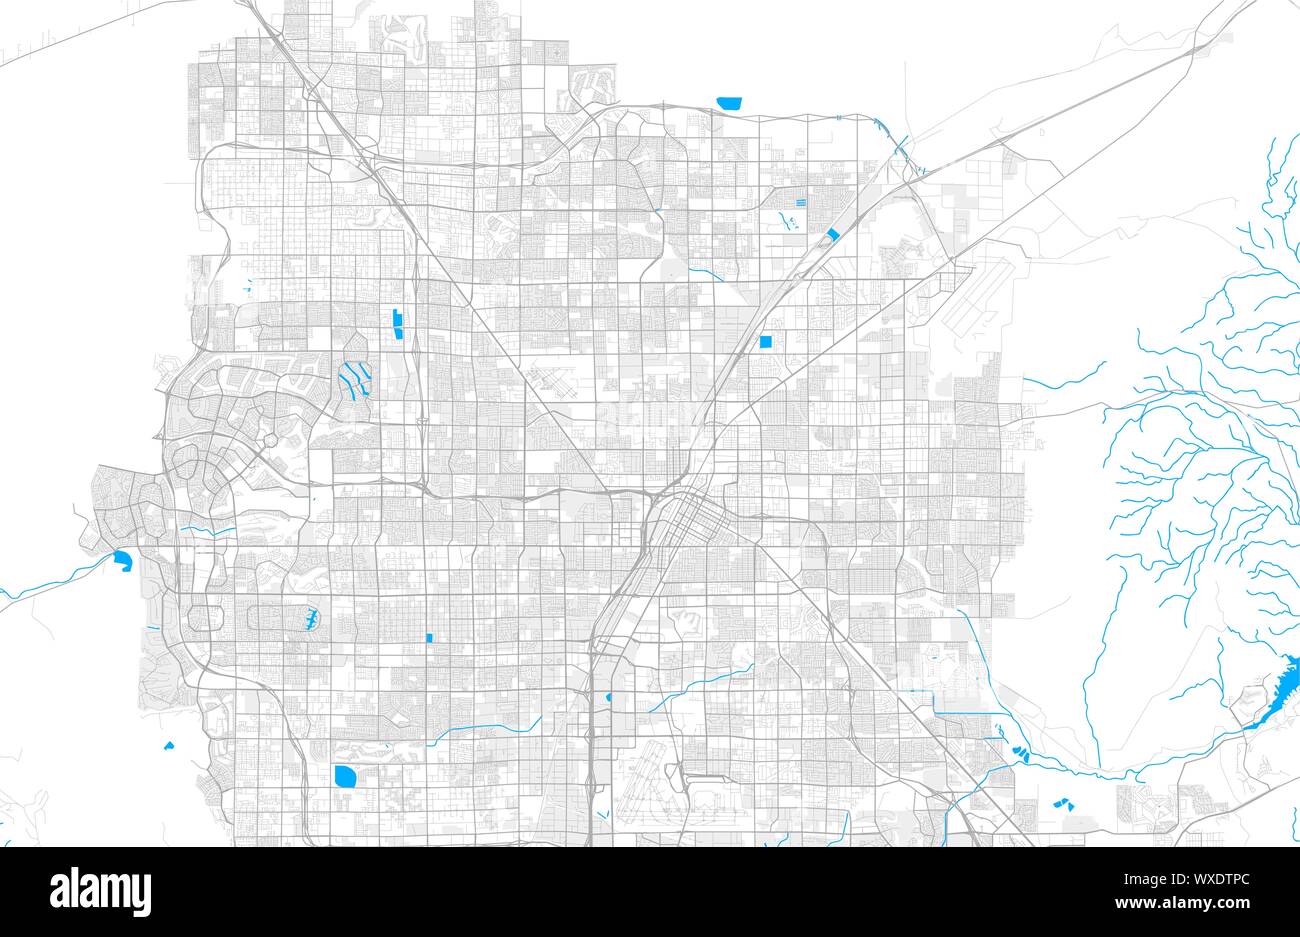 Folded Map: Las Vegas/ The Strip Street Map